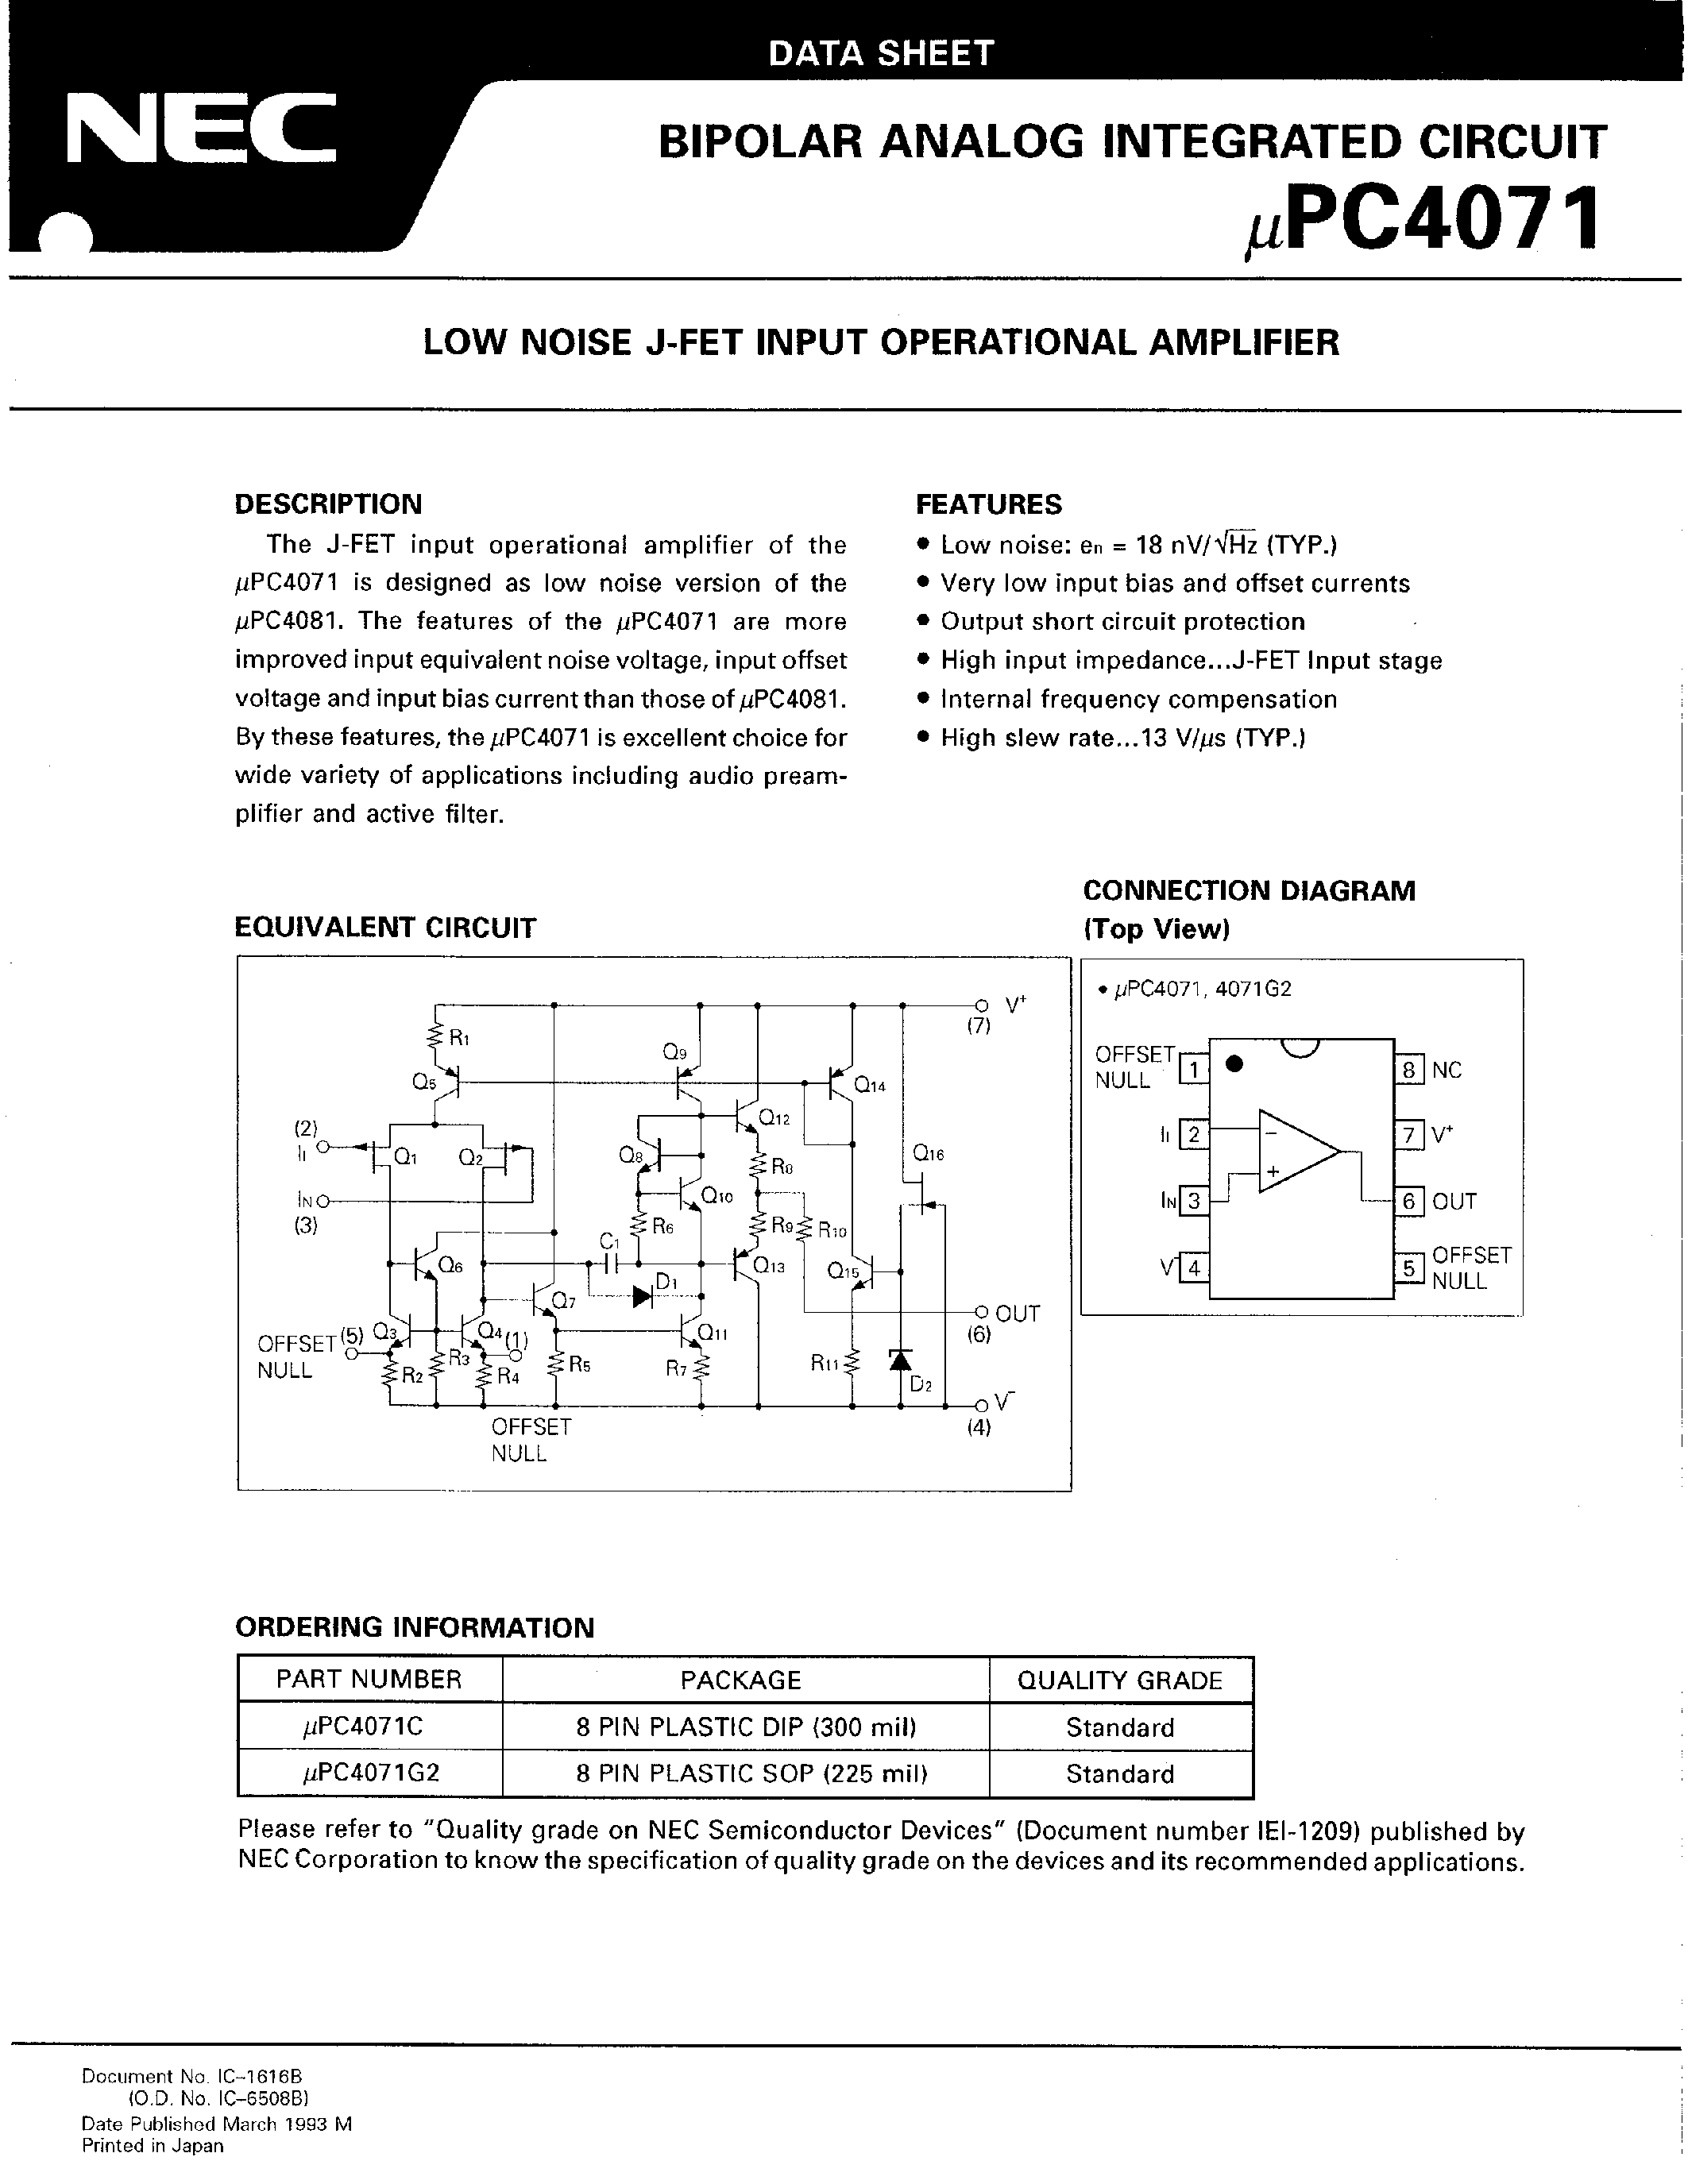 Даташит UPC4071G2 - LOW NOISE J-FET INPUT OPERATIONAL AMPLIFIER страница 1